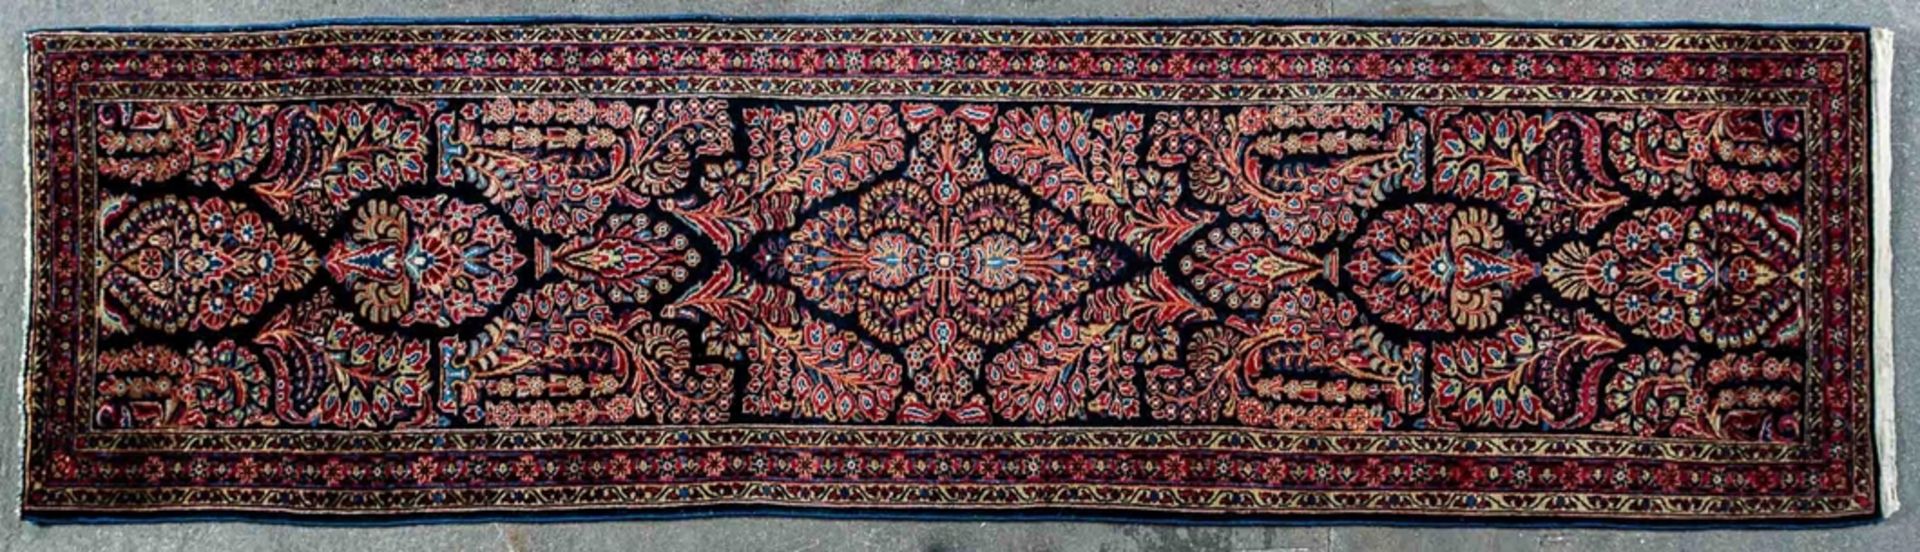 Alte oder antike Sarough- Lilian Teppichgalerie, kräftige Farbgebung mit seidigem Glanz, nahezu gle